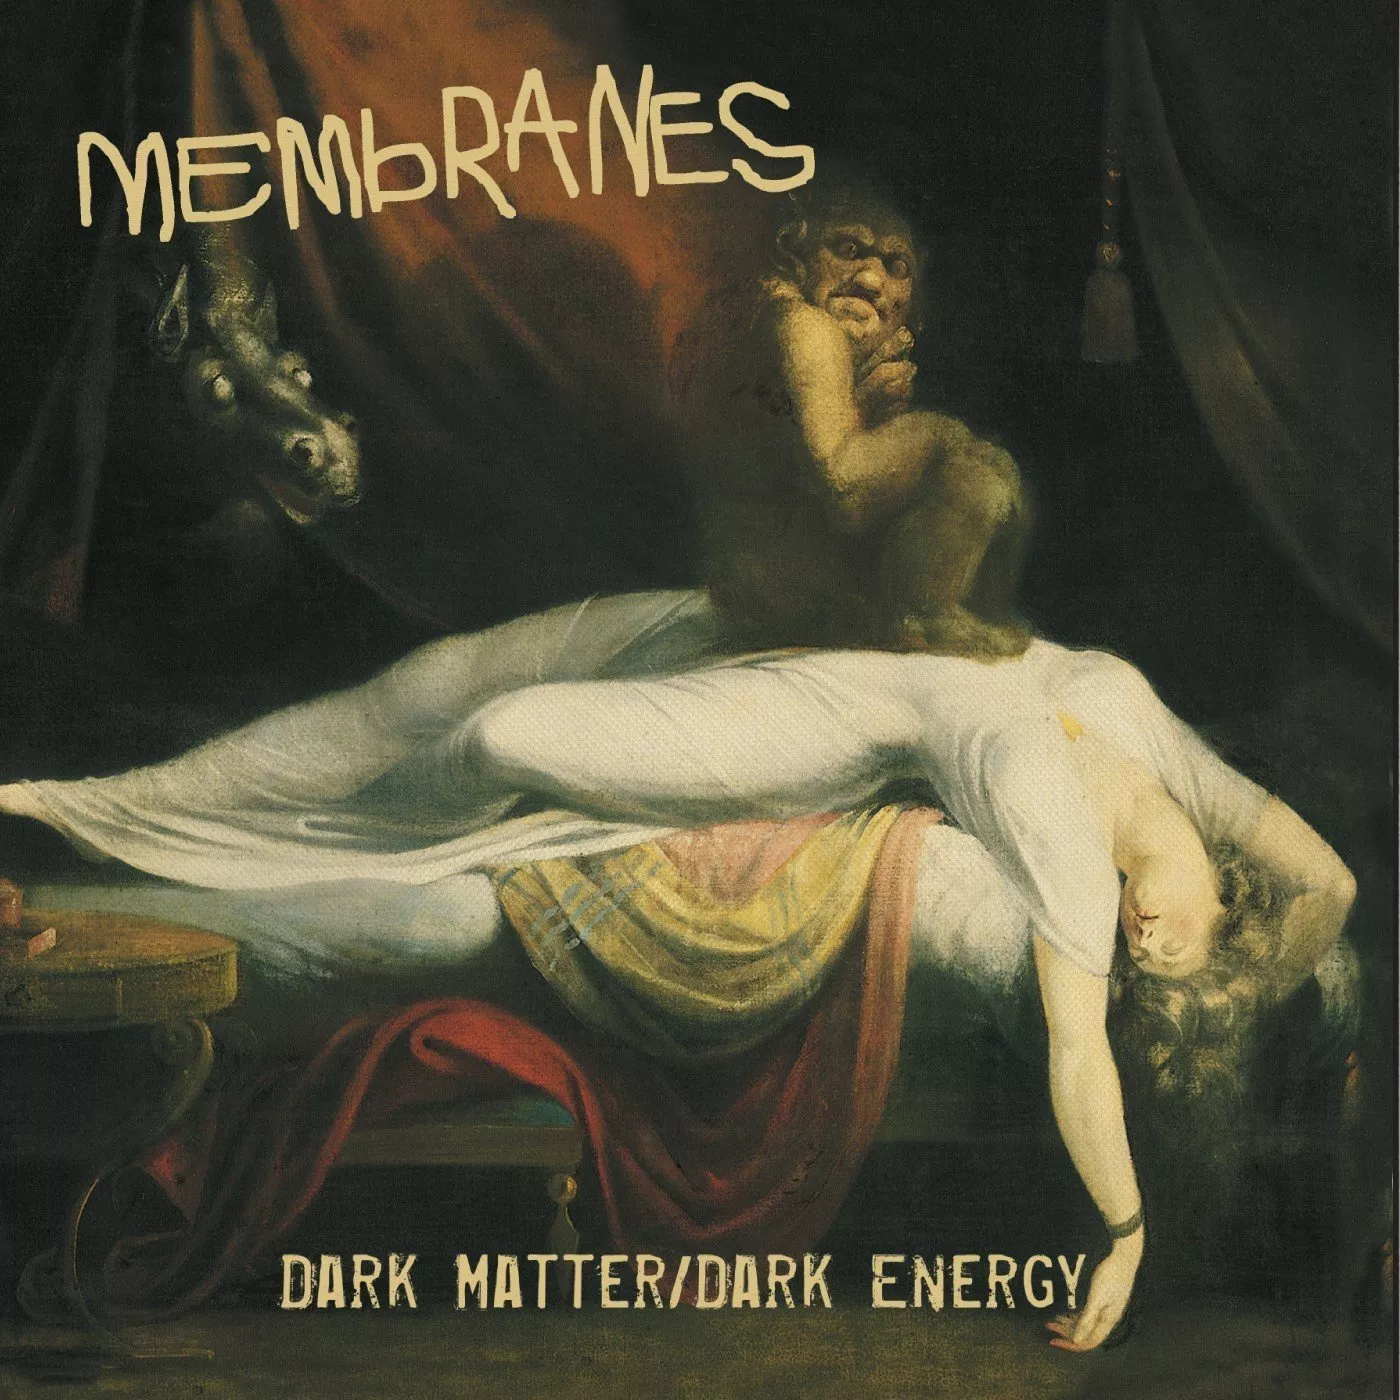 Dark Matter/Dark Energy - Membranes